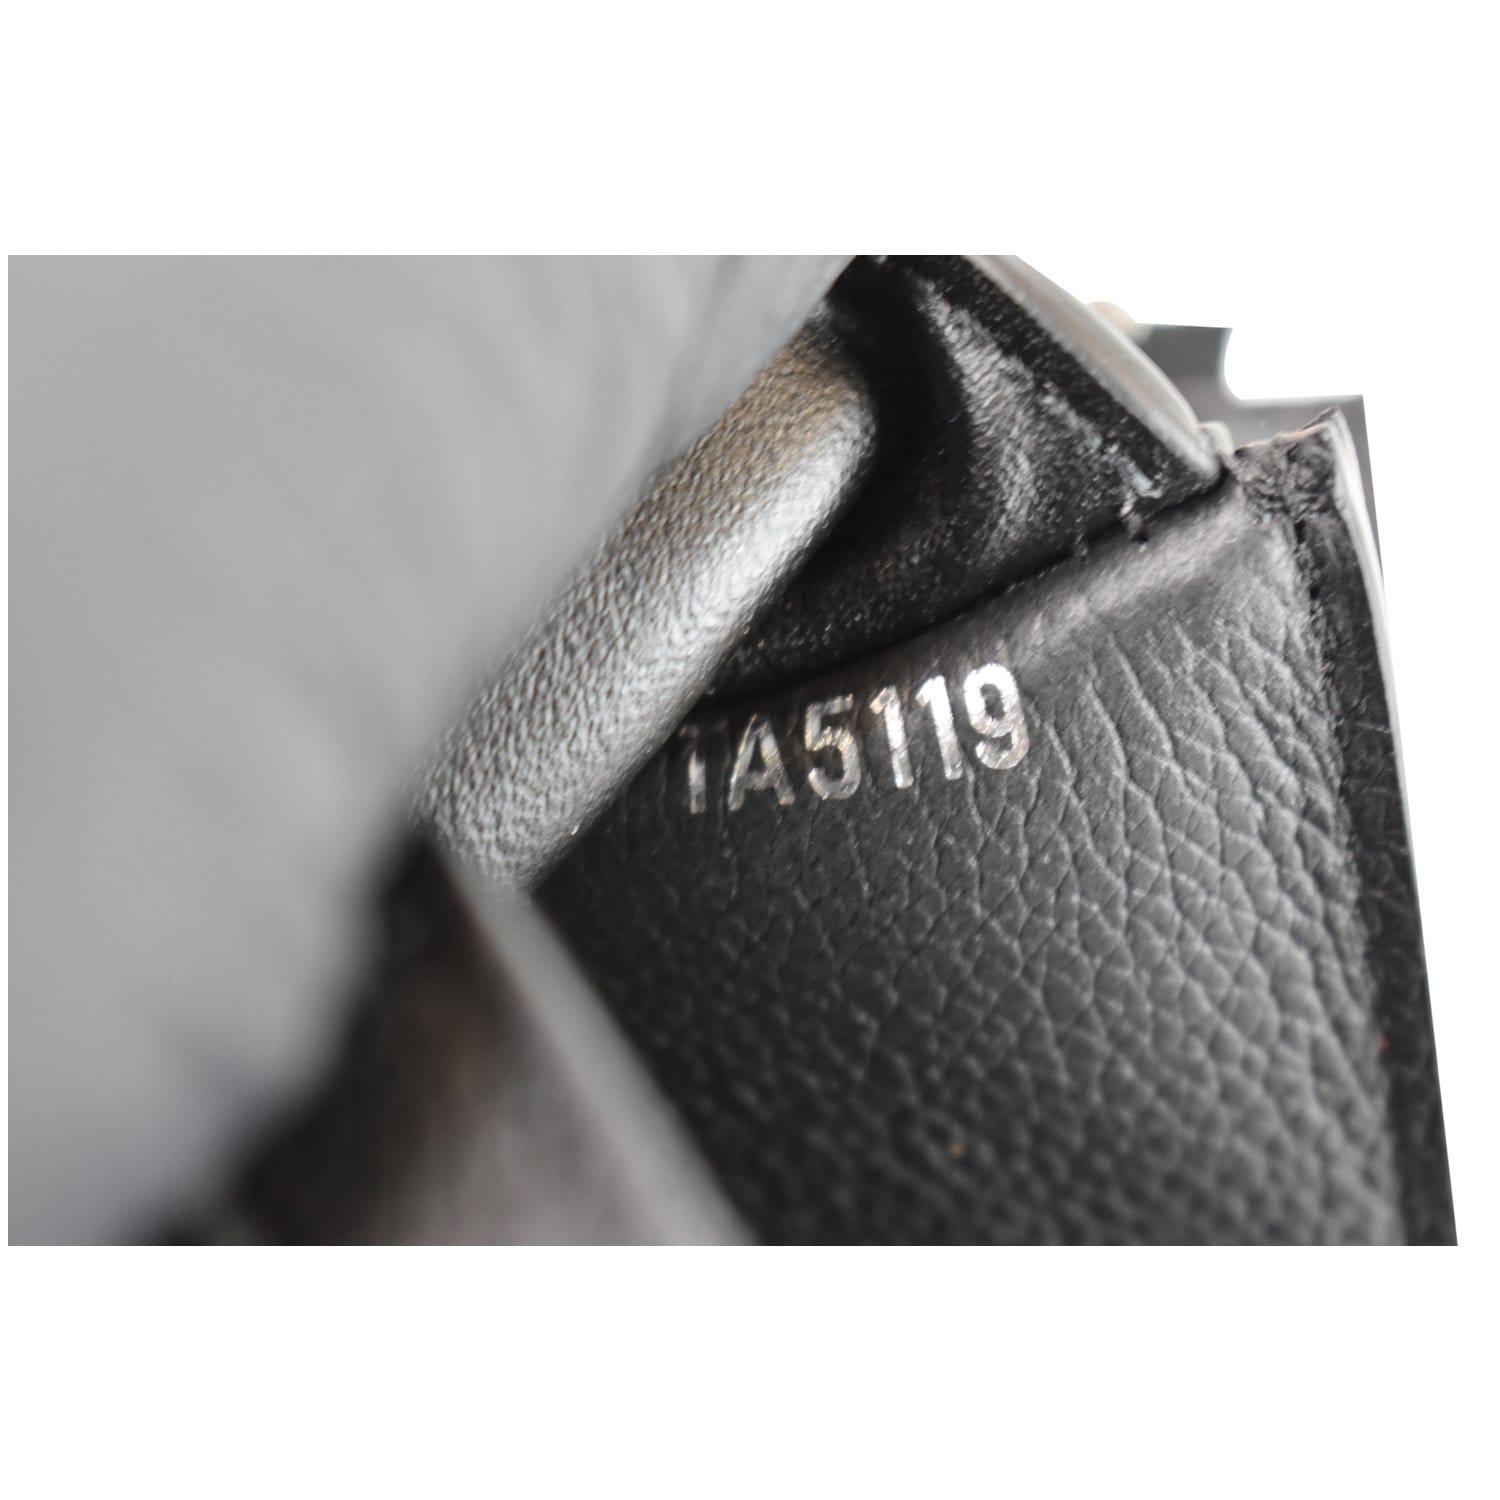 Louis Vuitton MyLockme Compact Wallet Leather Black 1855273